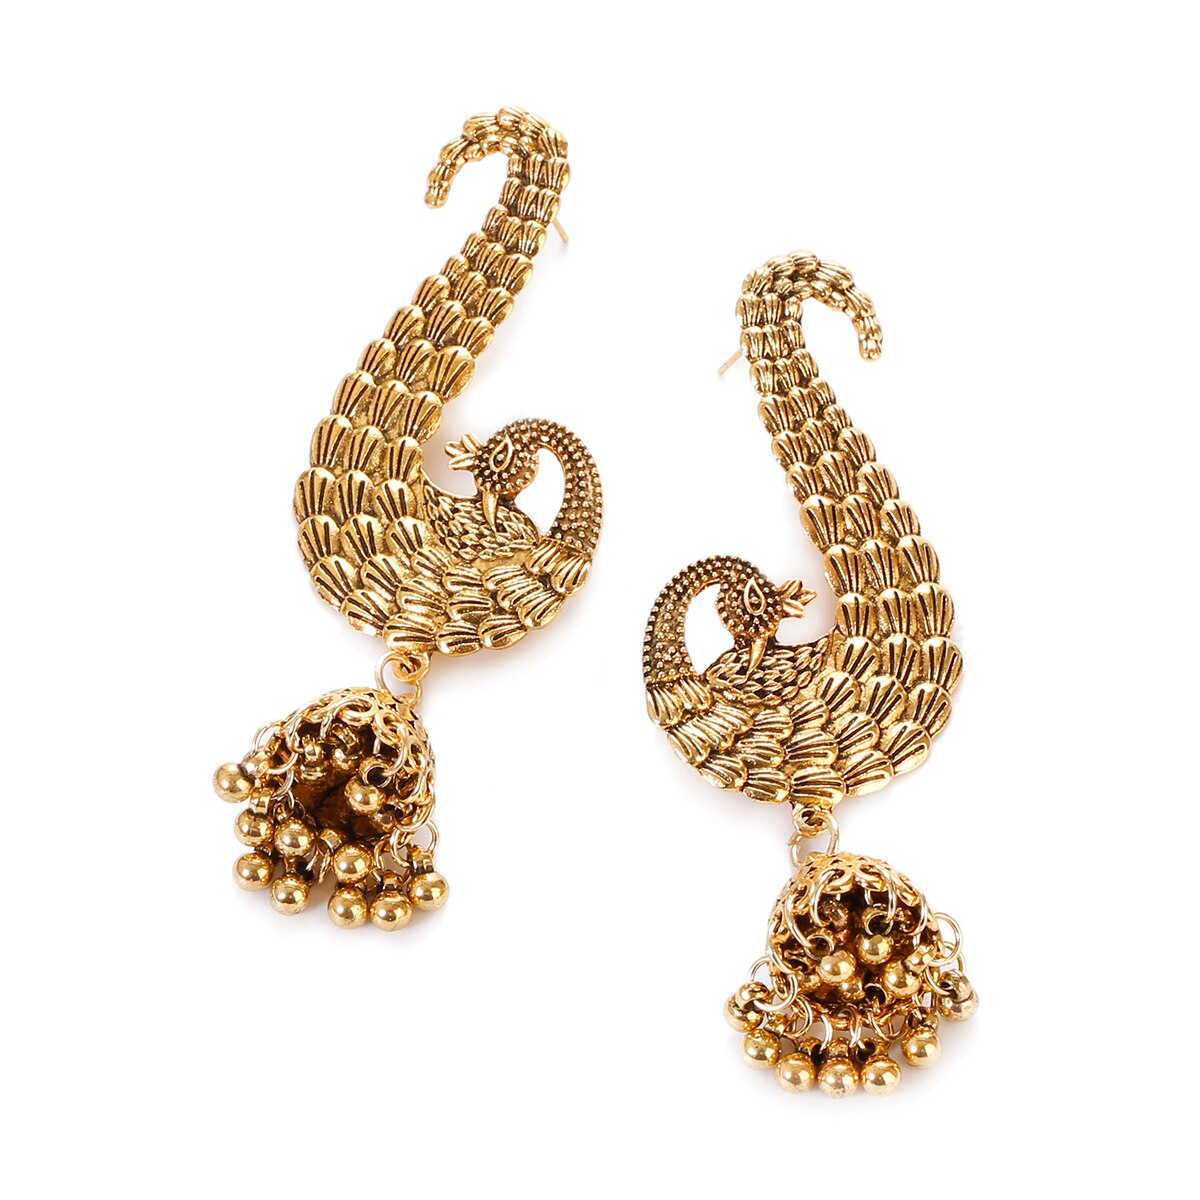 Retro-Luxury-Peacock-Indian-Earrings-For-Women-Ethnic-Gold-Color-Earrings-Piercing-Wedding-Jewelry-A-3256803821359707-5